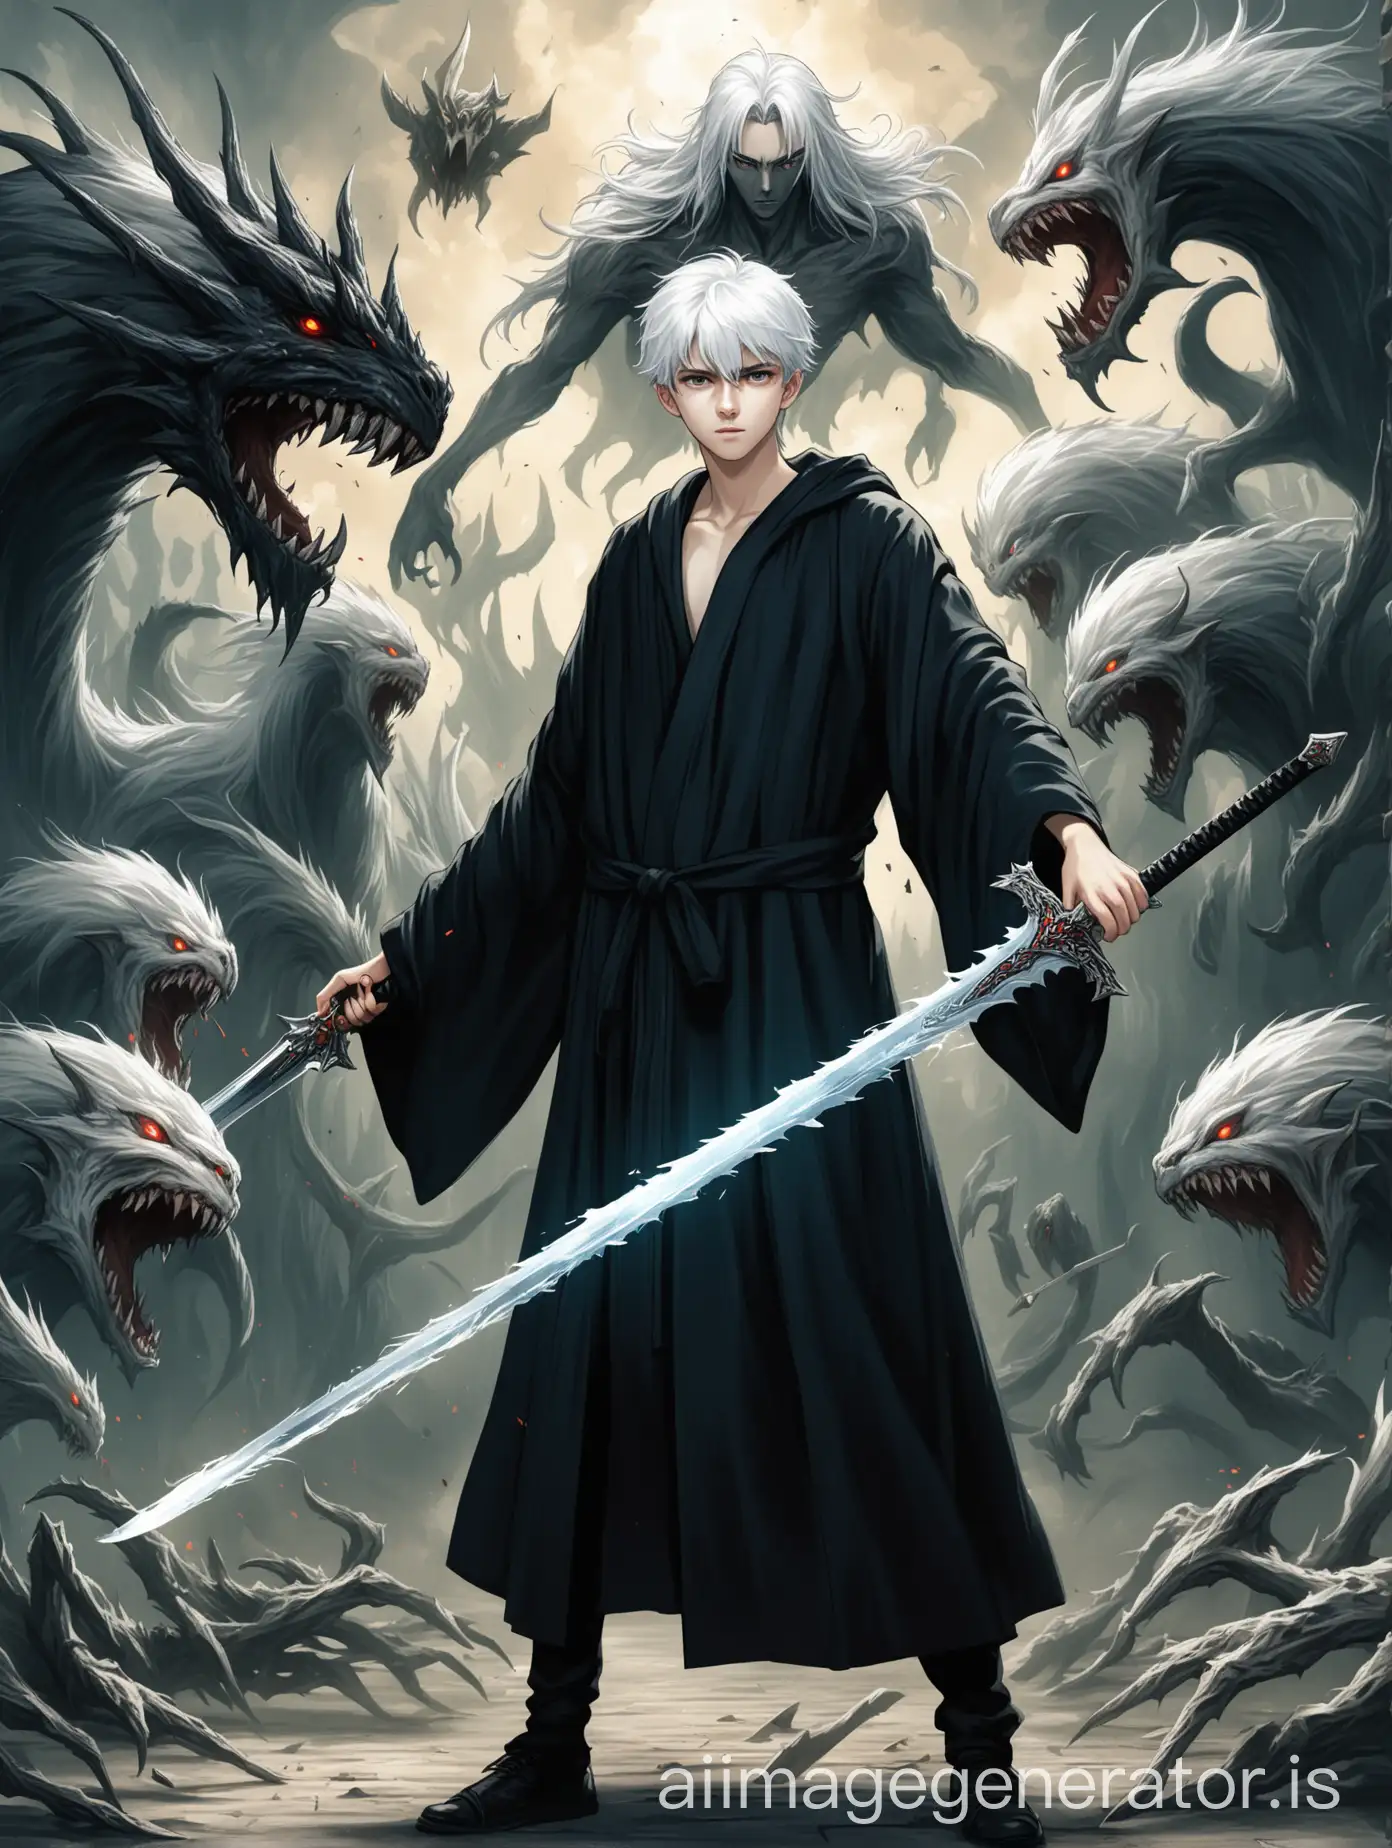 a handsome white-haired teenager in black robe holding a strange sword killing monsters